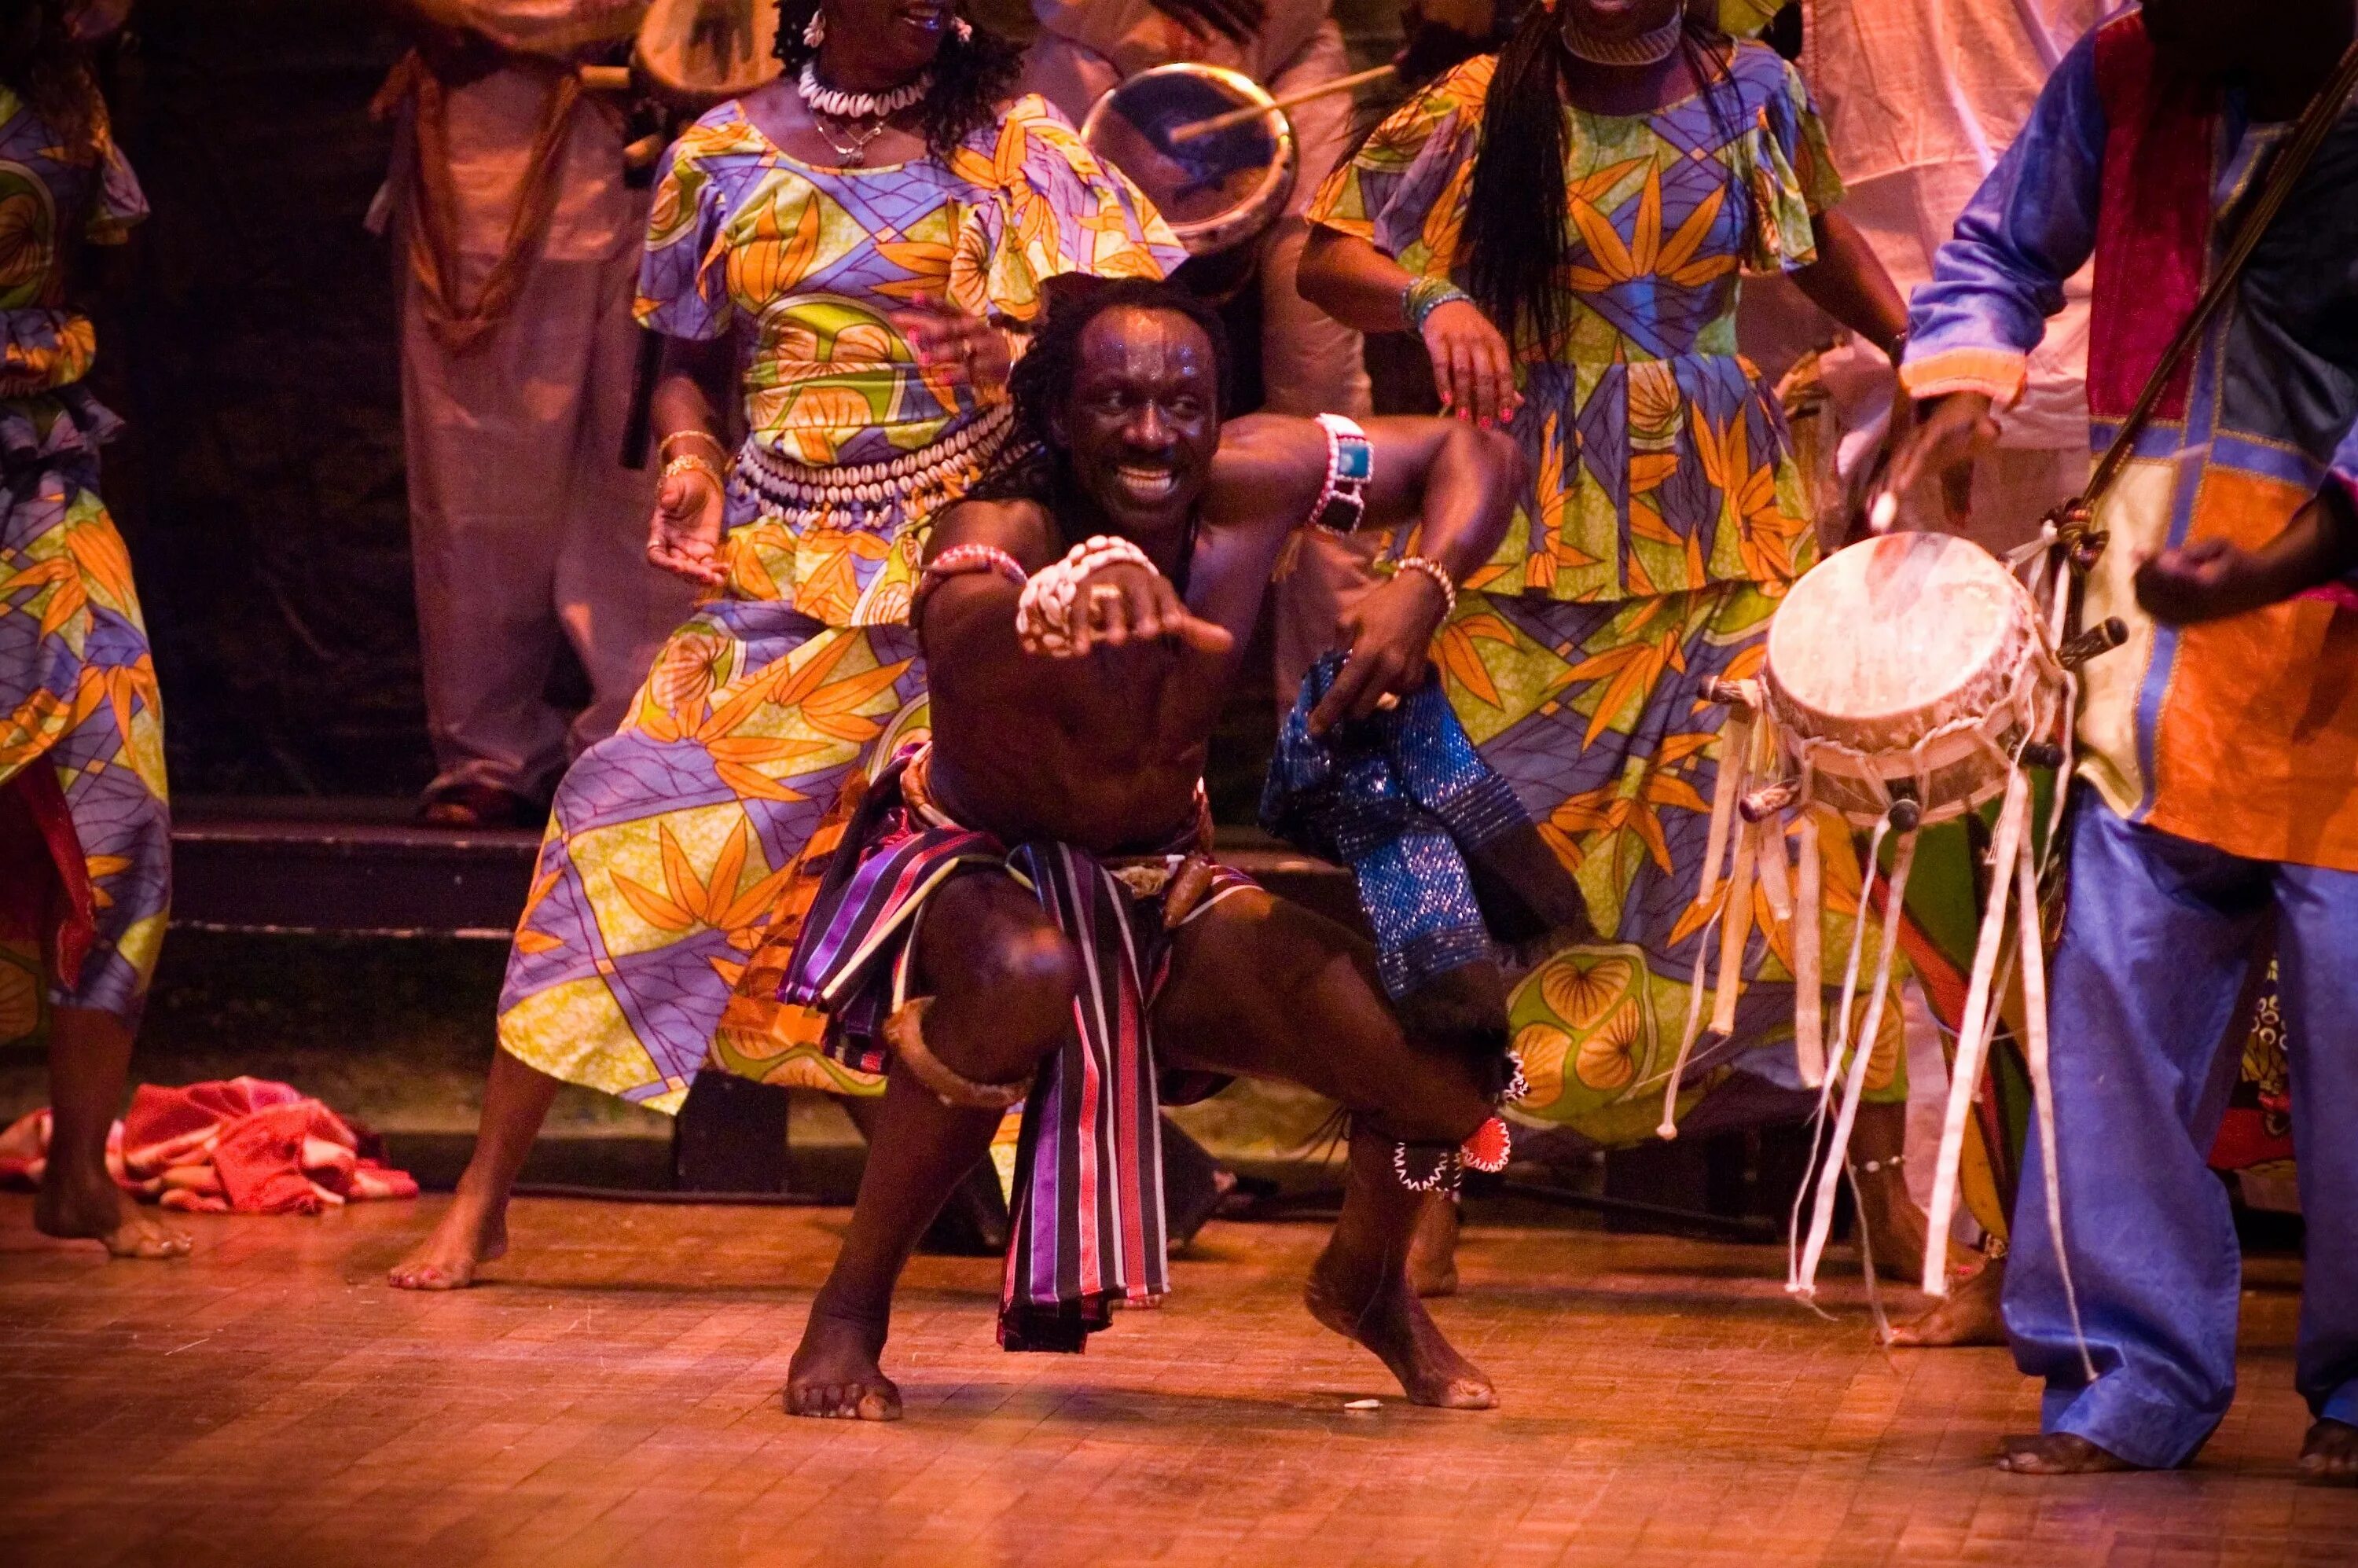 Танцующий чернокожий. Танцы народов Африки. Африканские народные танцы. Африканские национальные танцы. Танцы афроамериканцев.